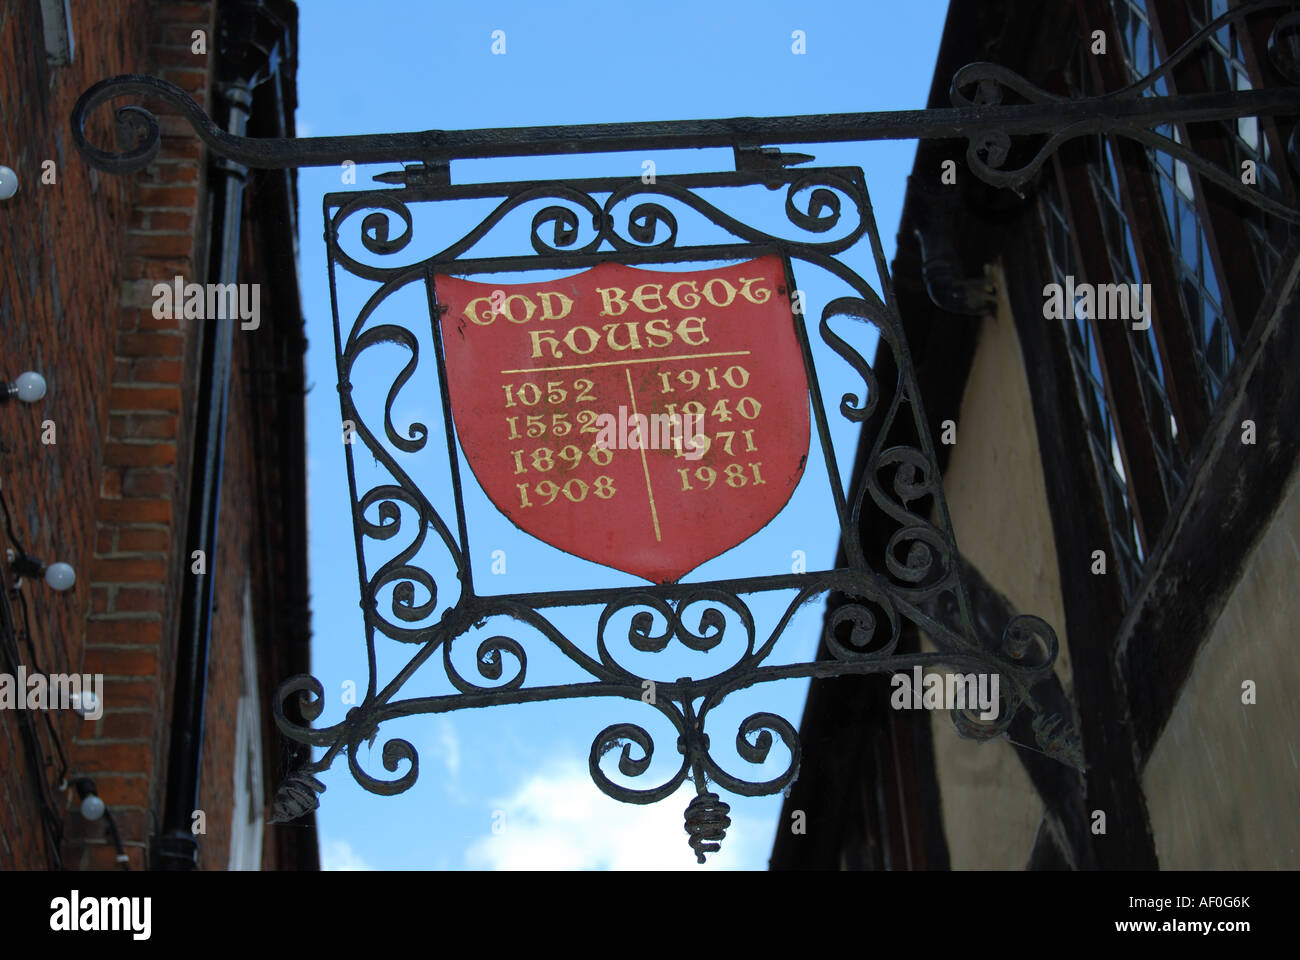 God Begot House sign, High Street, Winchester, Hampshire, England, United Kingdom Stock Photo